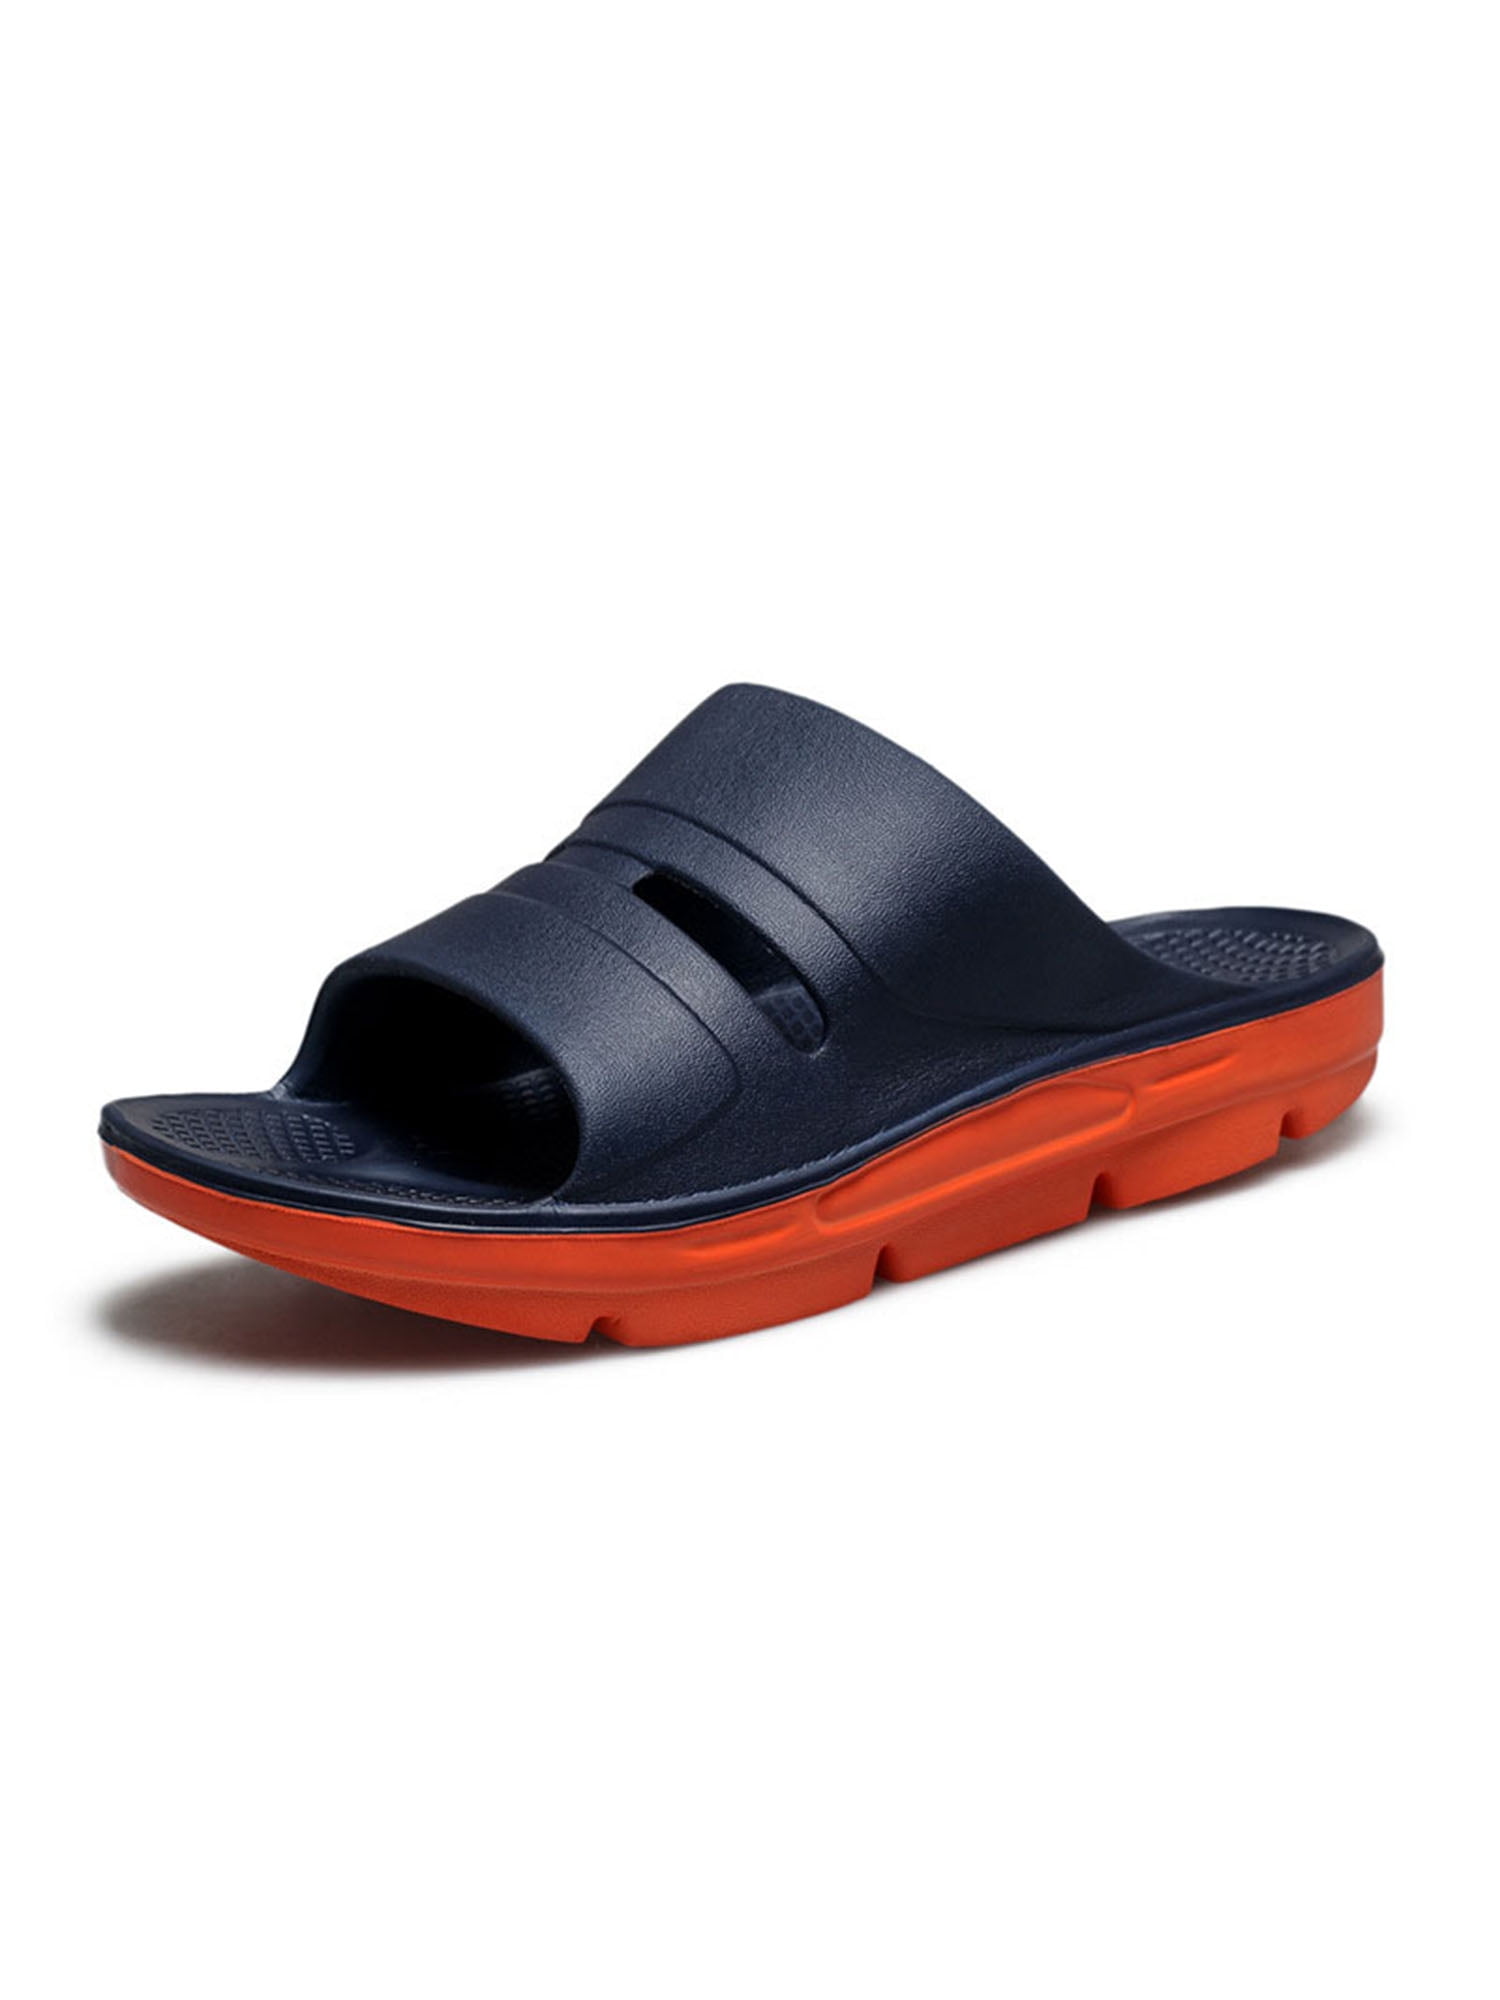 Ymiytan Men Athletic Slide Sandal Beach Comfort Open Toe Slip-On Indoor ...